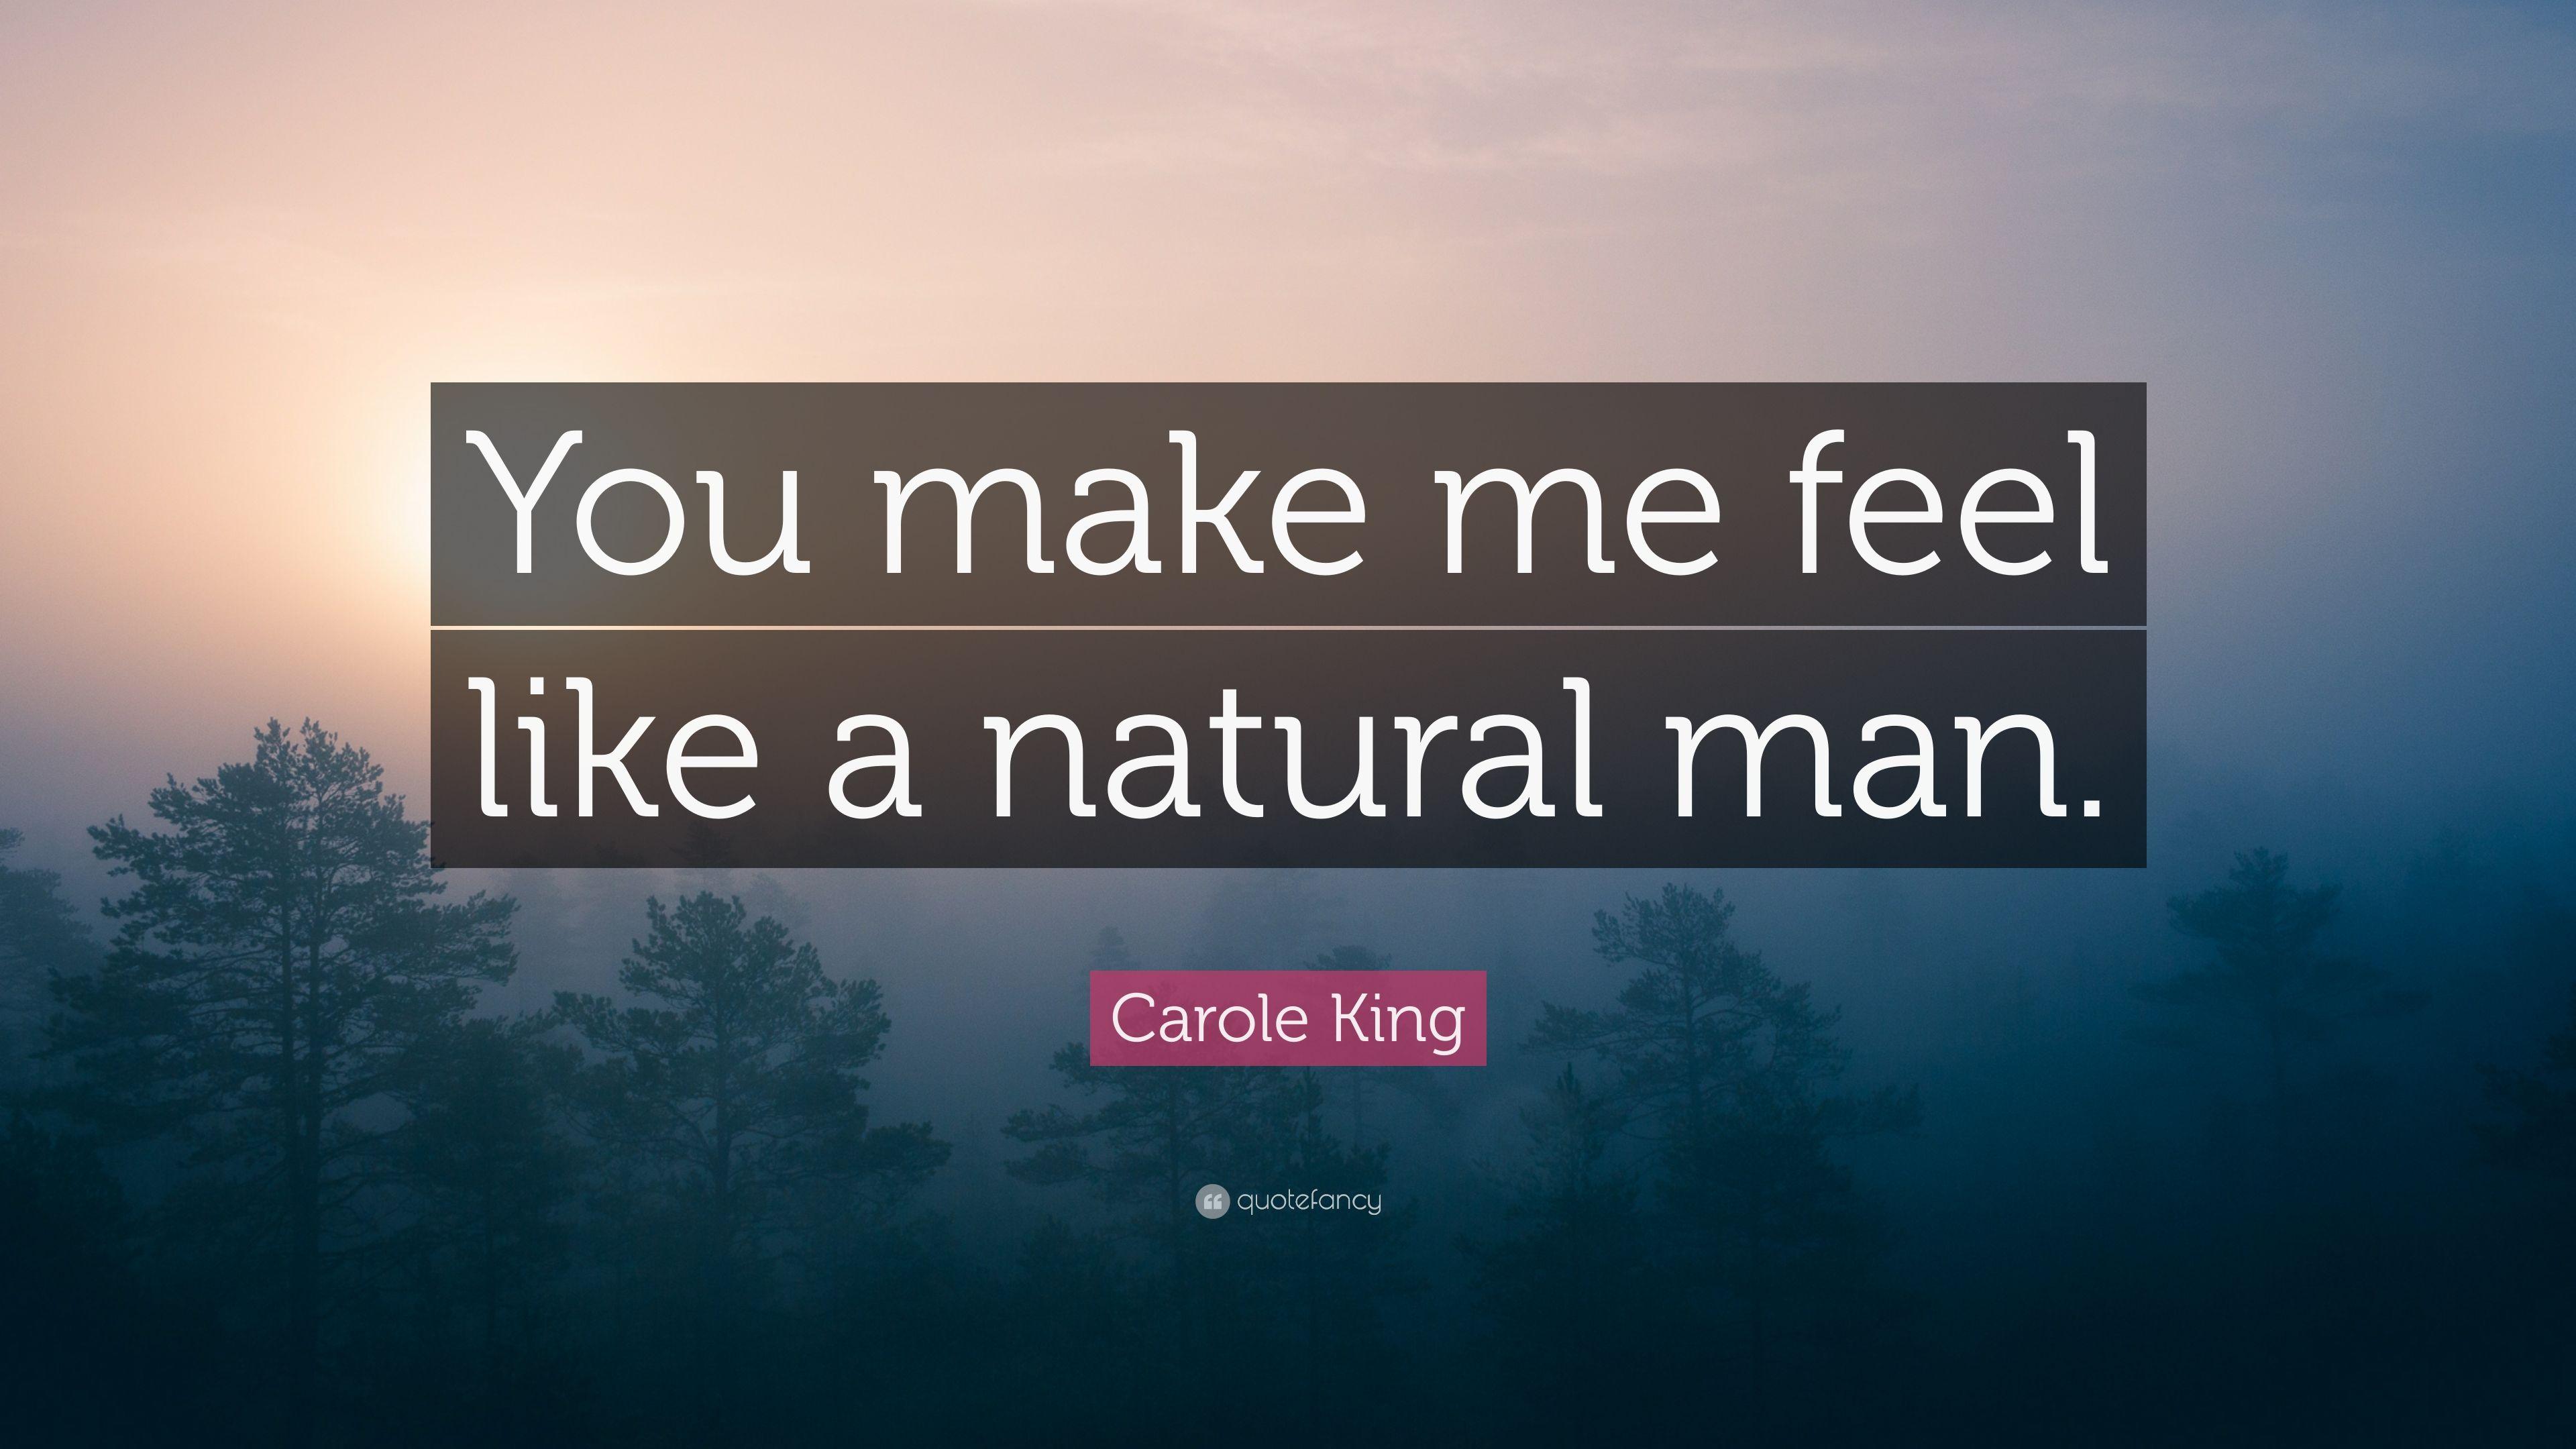 Carole King Quote: “You make me feel like a natural man.” 7